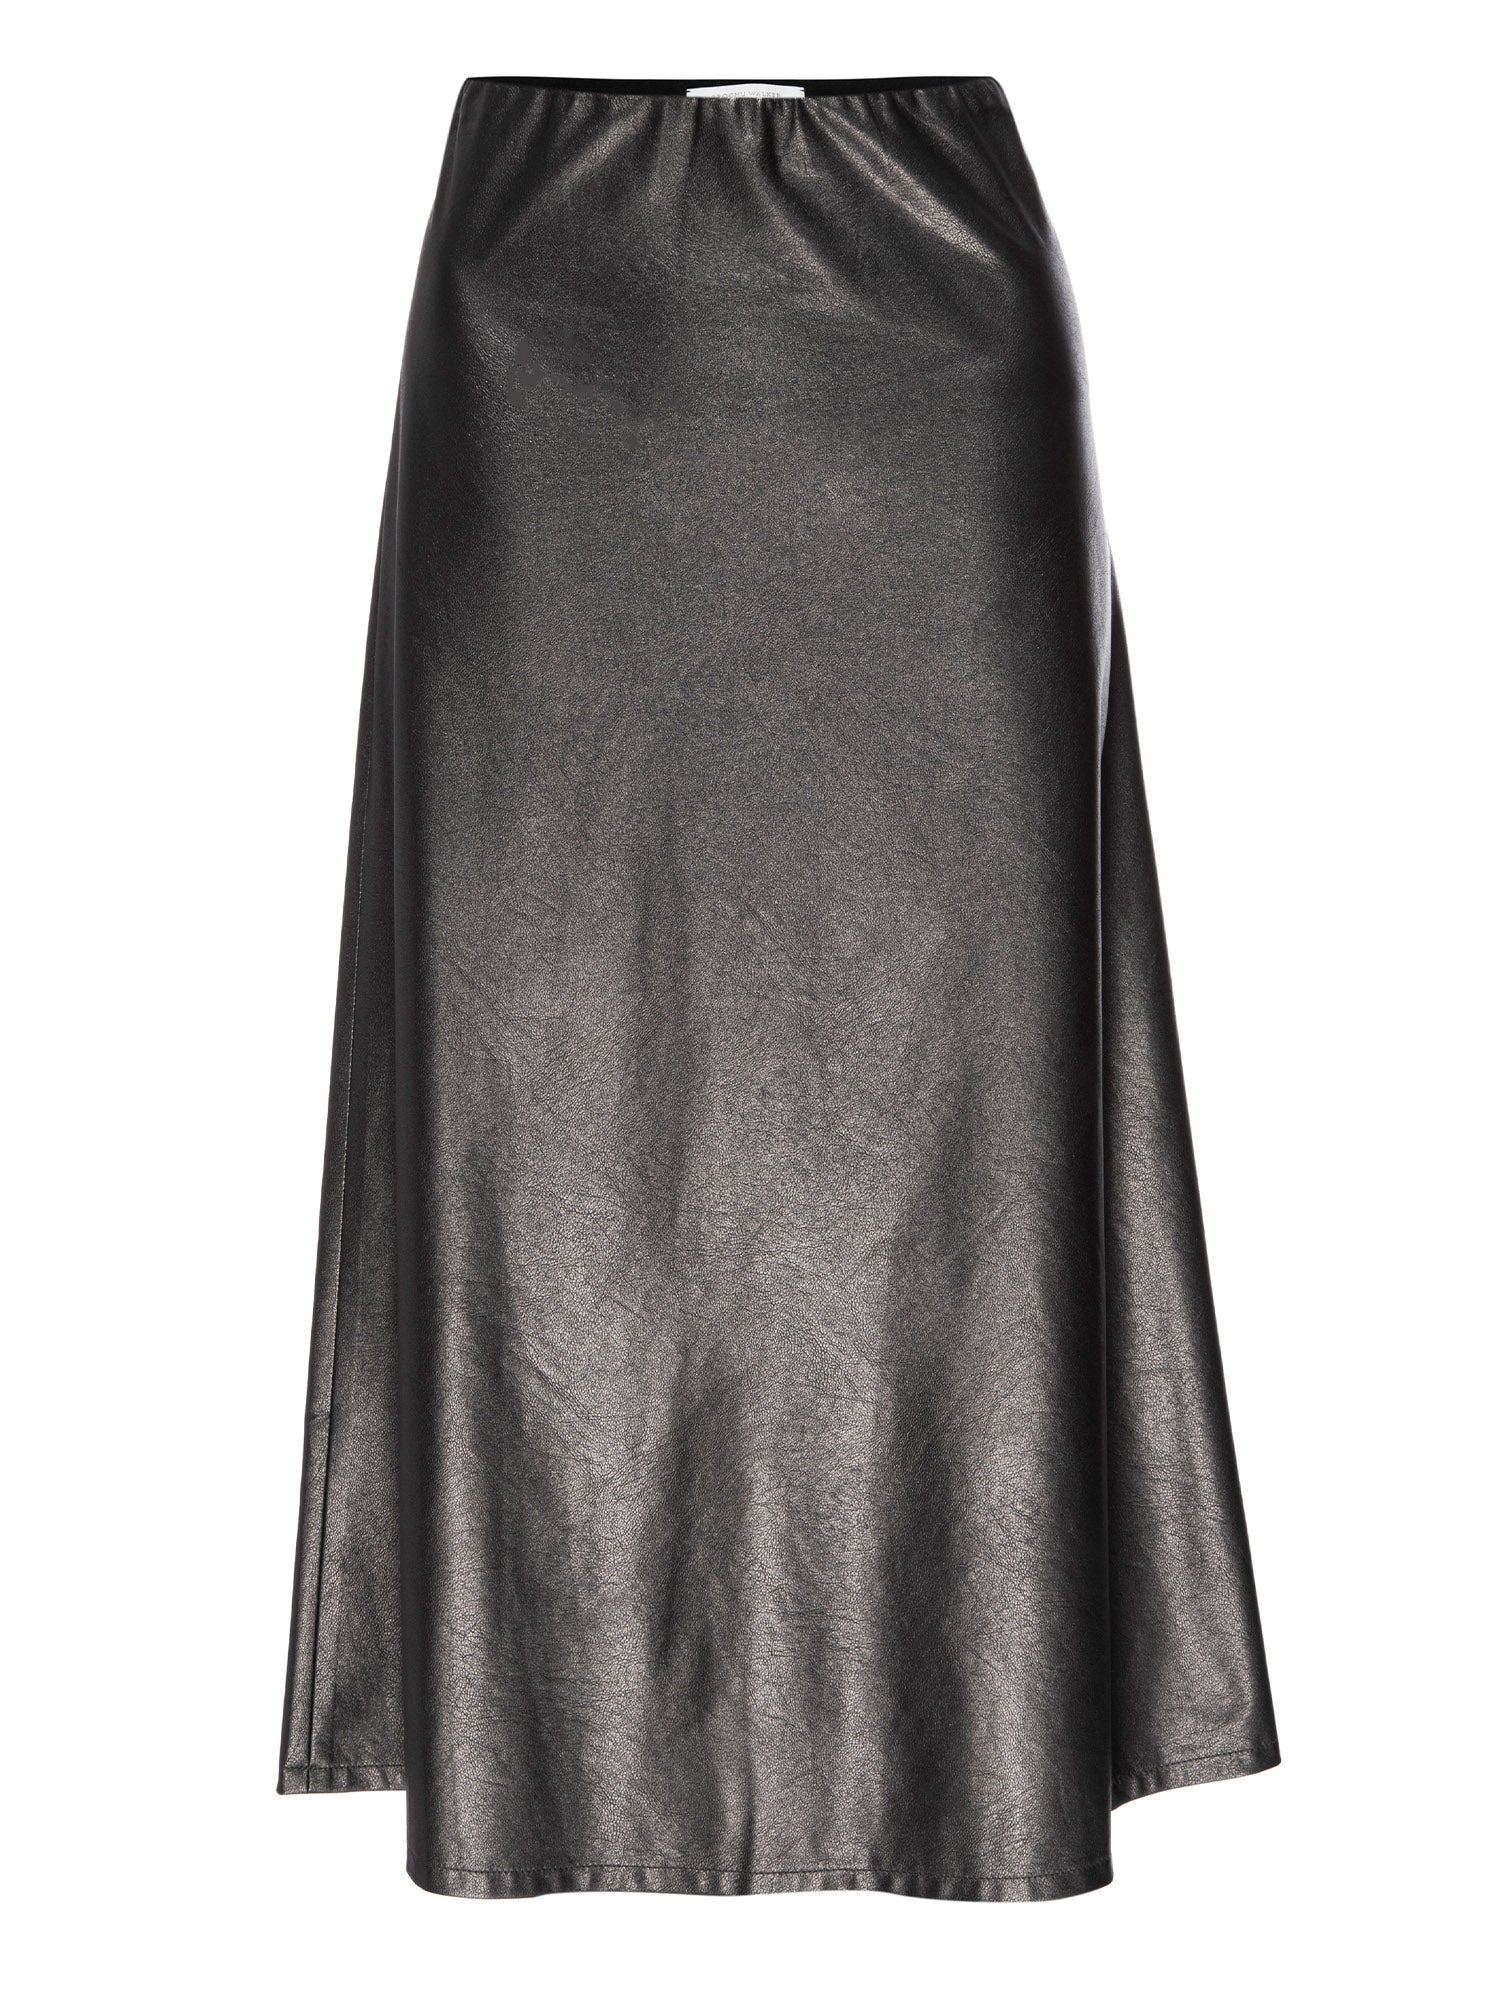 Hallie vegan leather metallic grey midi skirt flat view